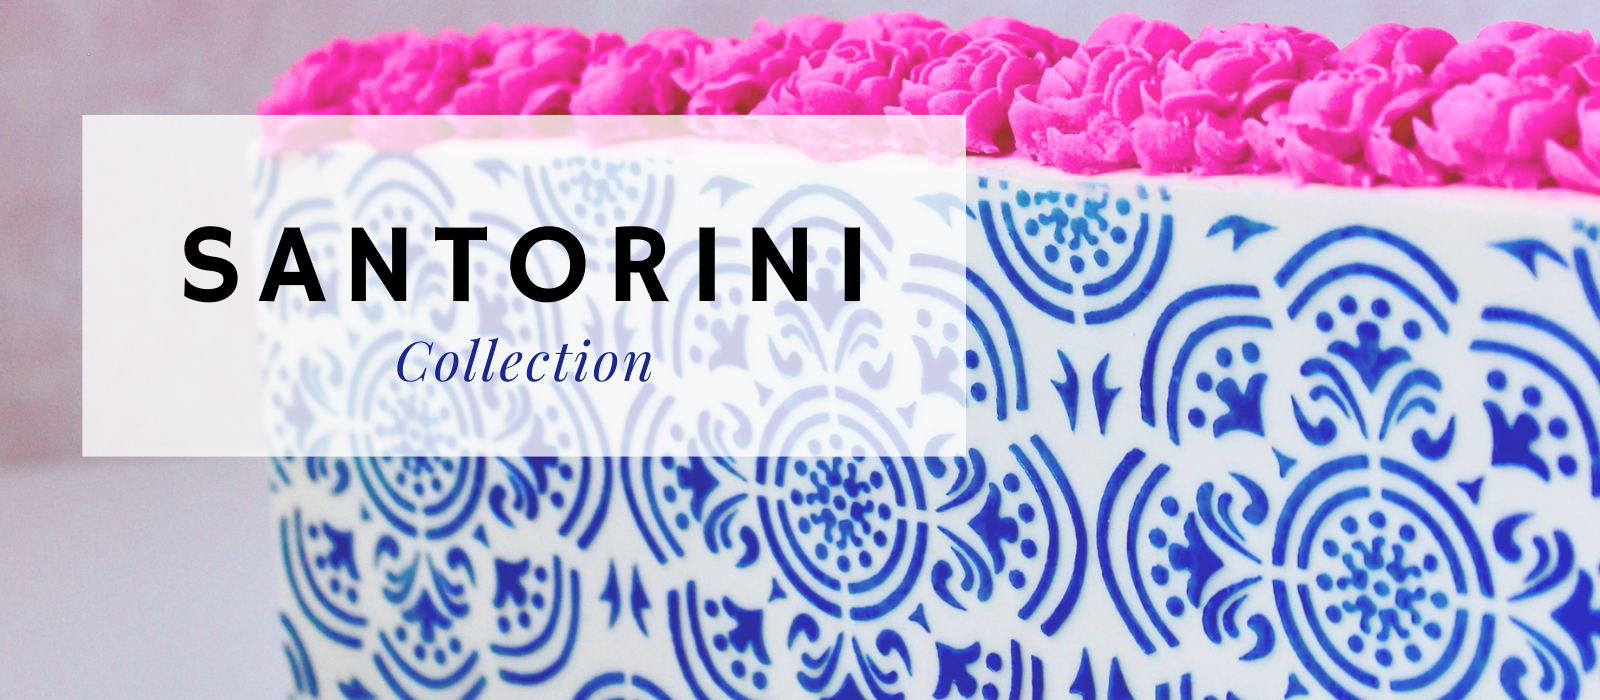 Santorini Collection